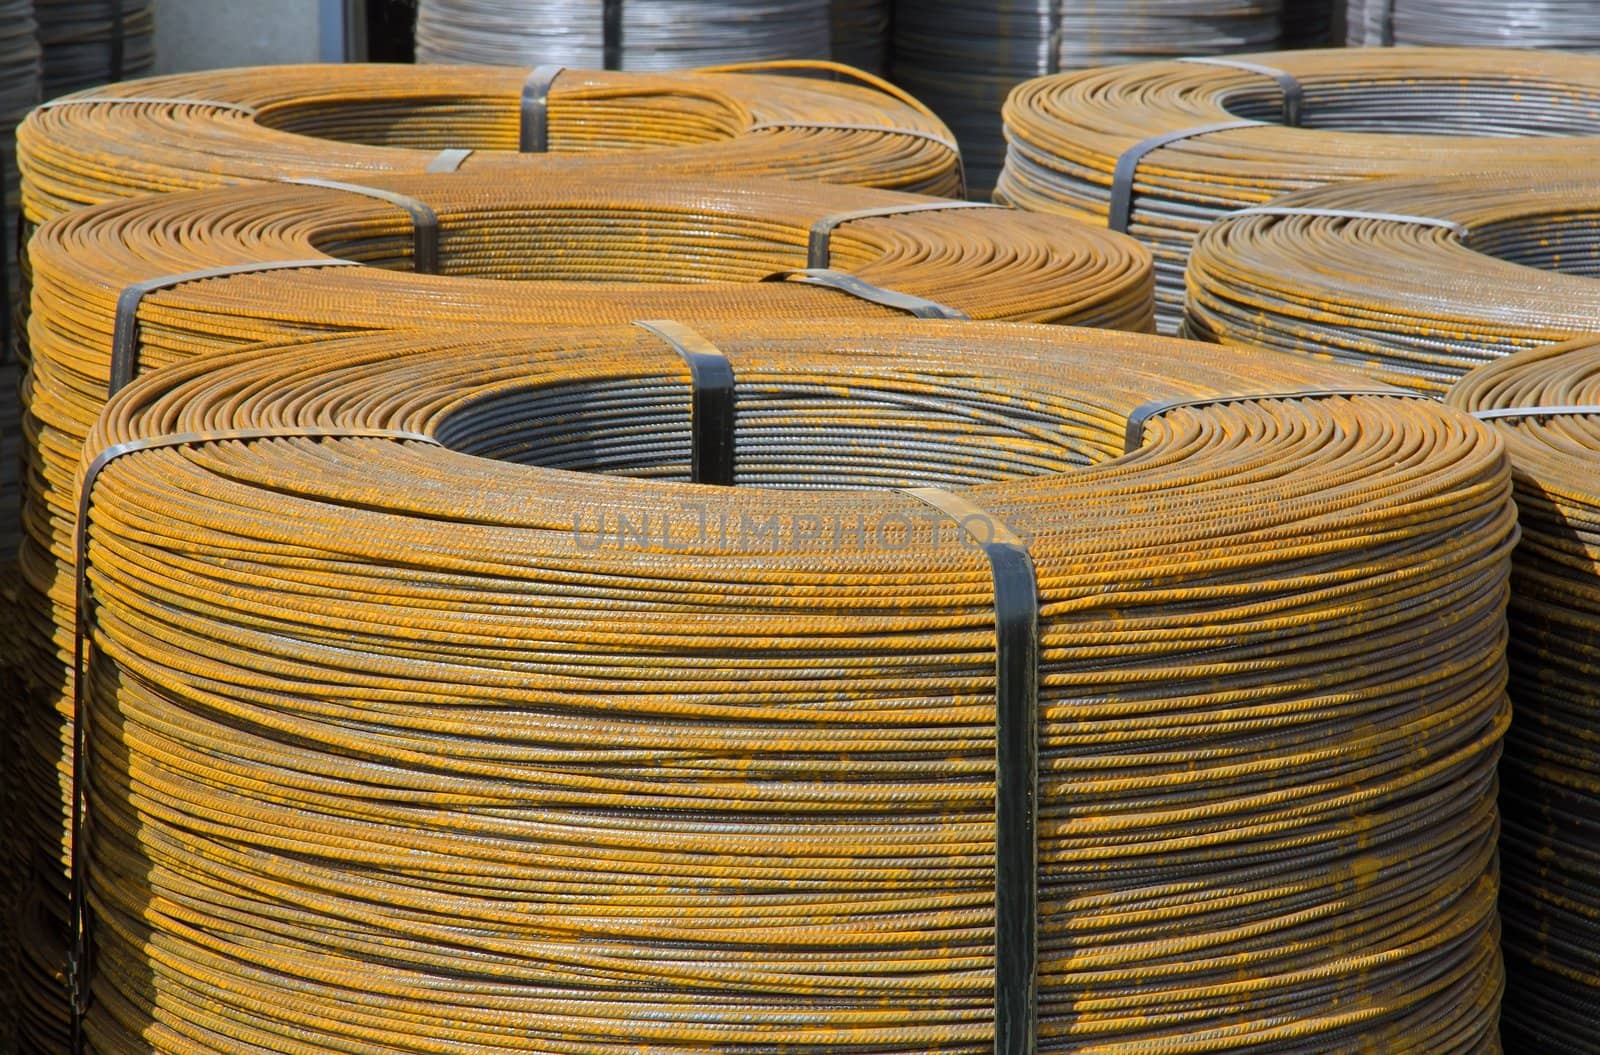 rolls of steel wire, reinforcing industrial